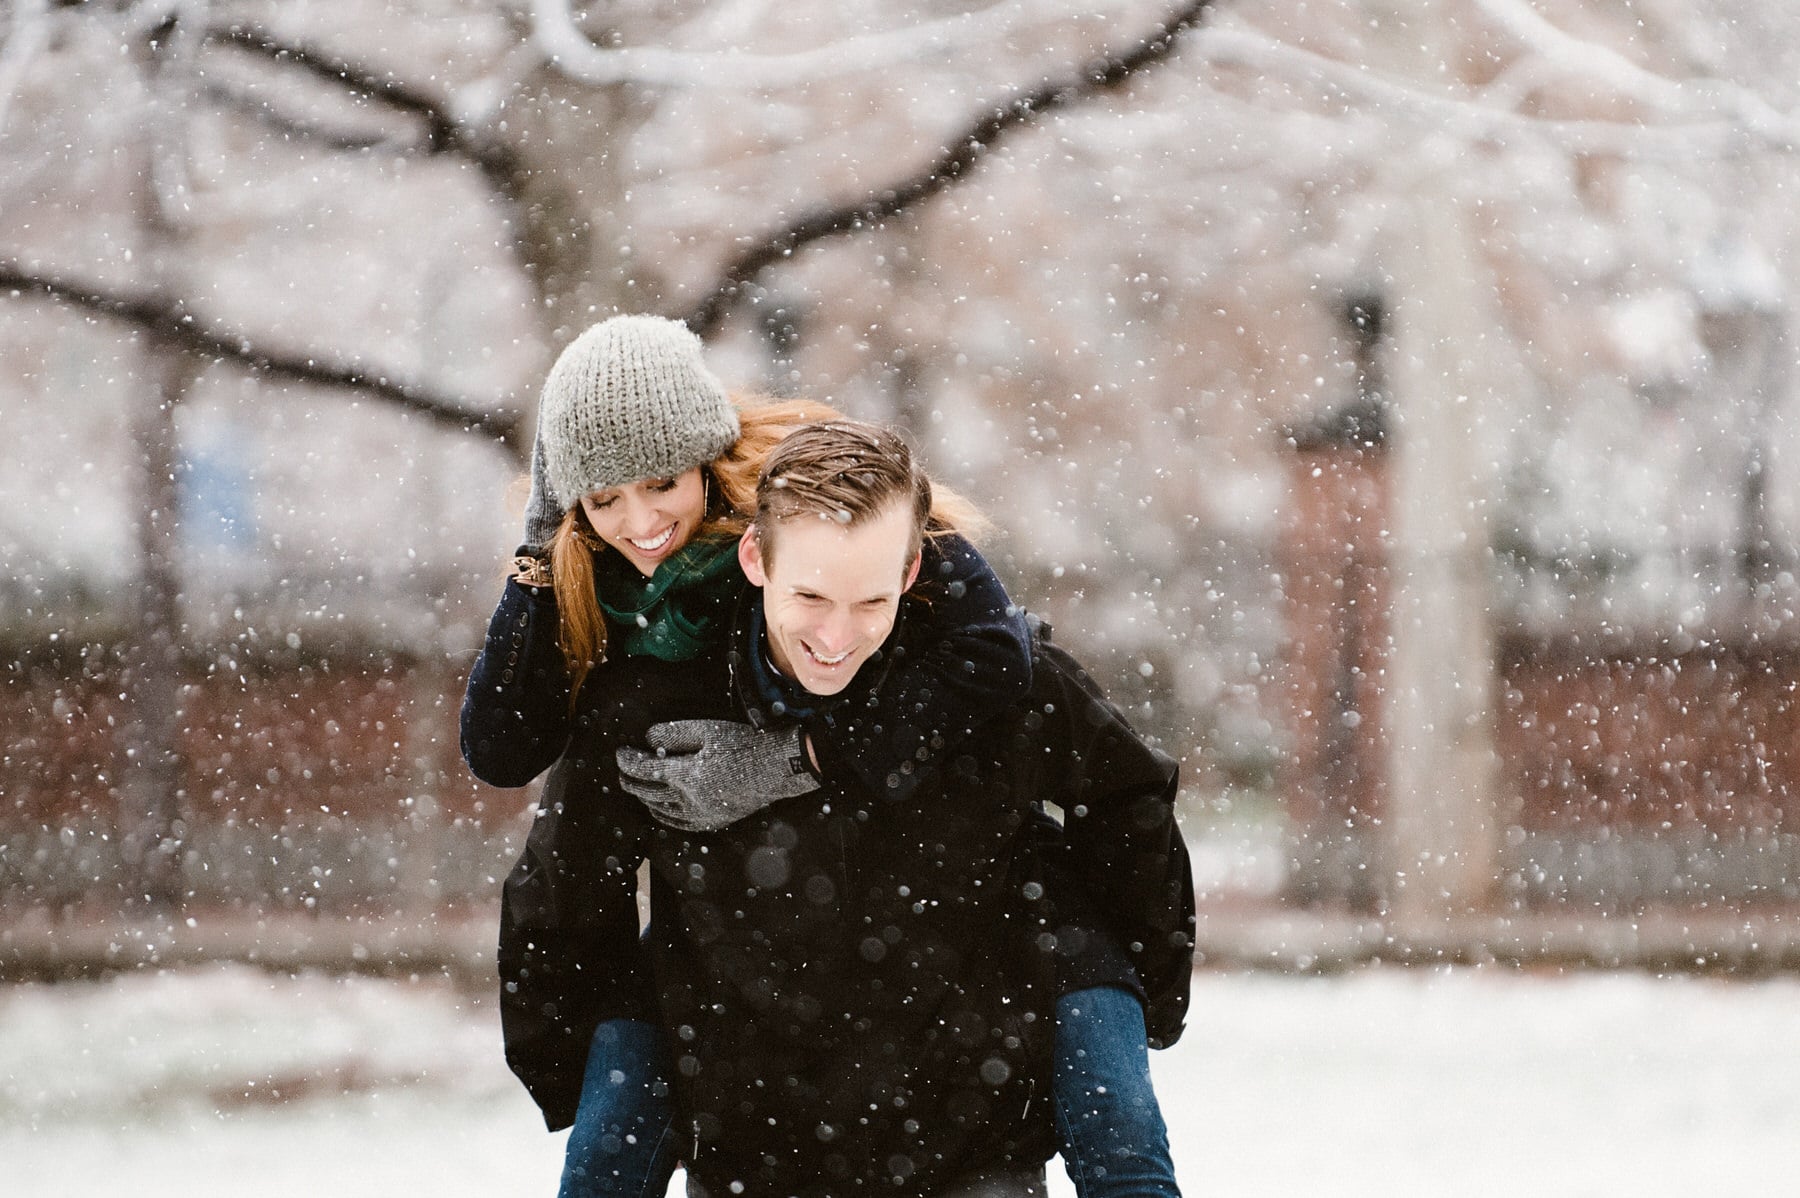 Fun Engagement photos in snow